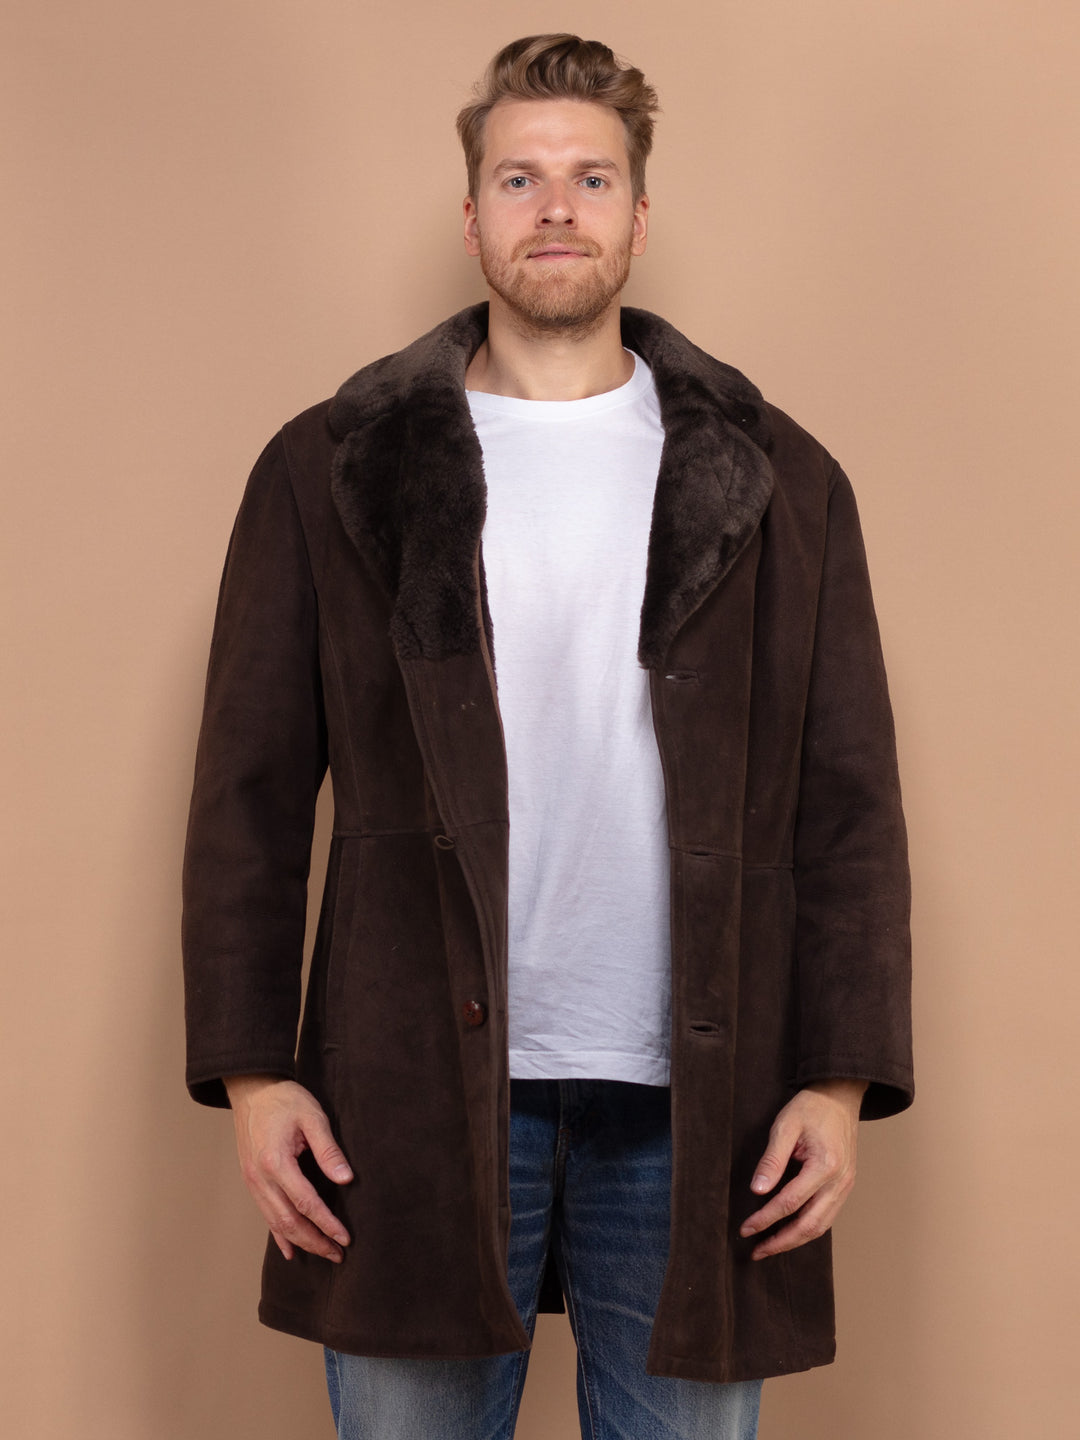 Sheepskin Men's Coat, Size Medium M Vintage 70's Shearling Coat, Brown Sheepskin Coat, Retro Chic Coat, Brown Fur Coat, Cowboy Coat